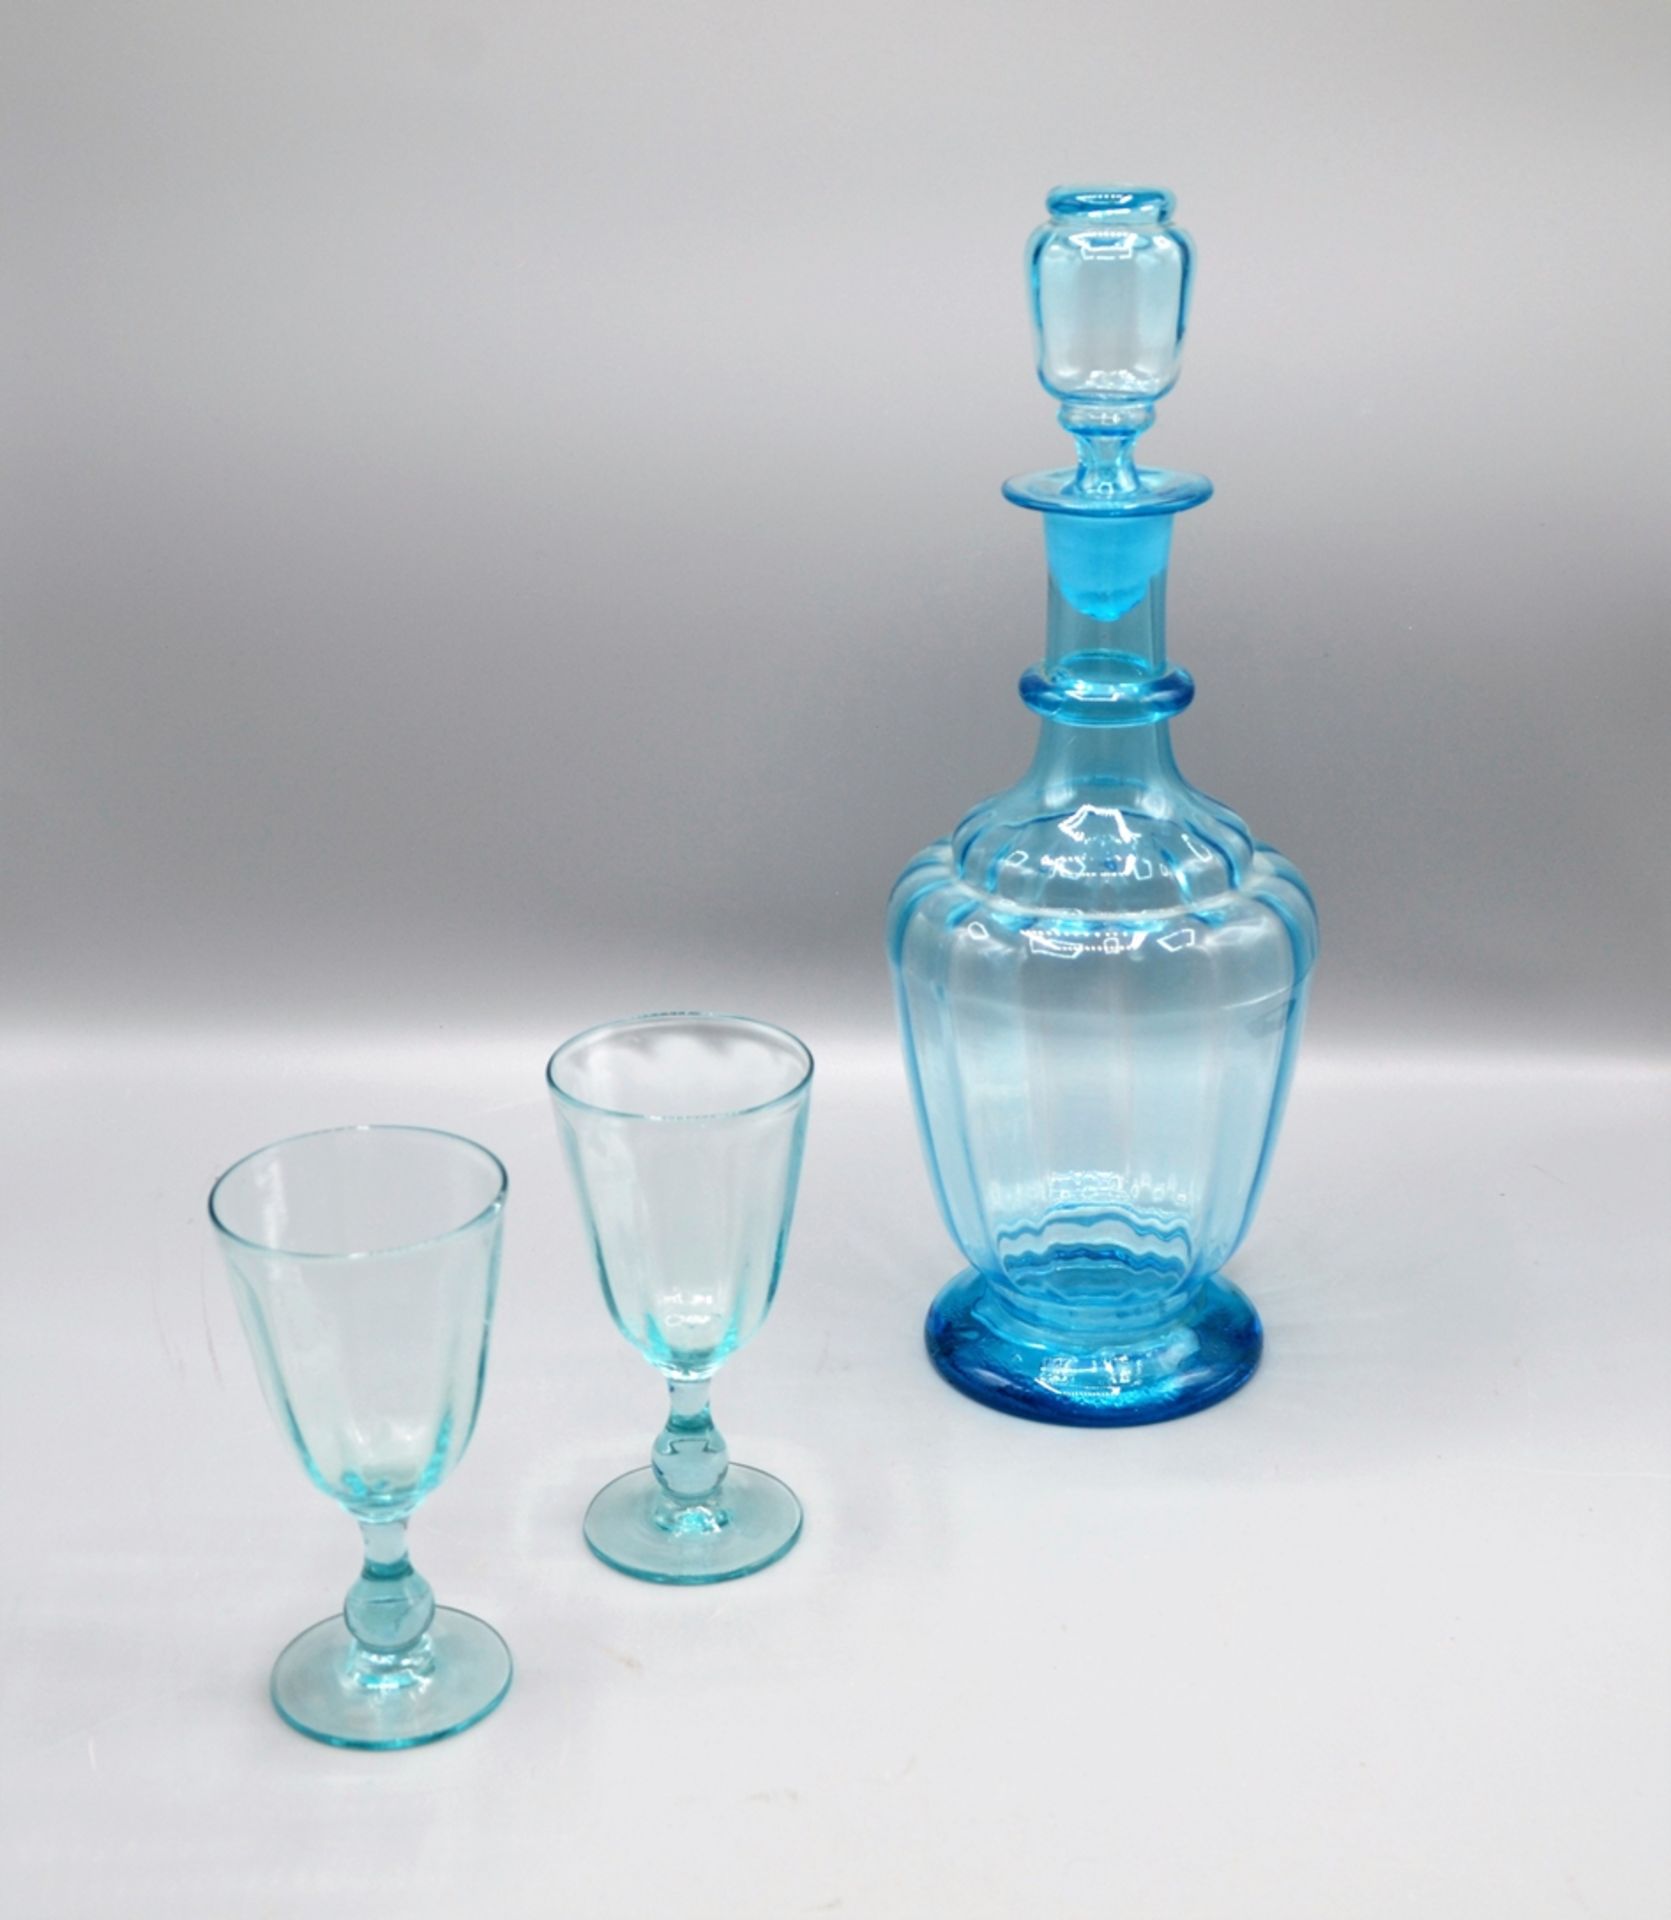 Rosenthal Joska etc. Glas Konvolut 6-teilig, darunter blaue mundgeblasene Karaffe u. 2 Becher um 19 - Image 2 of 2